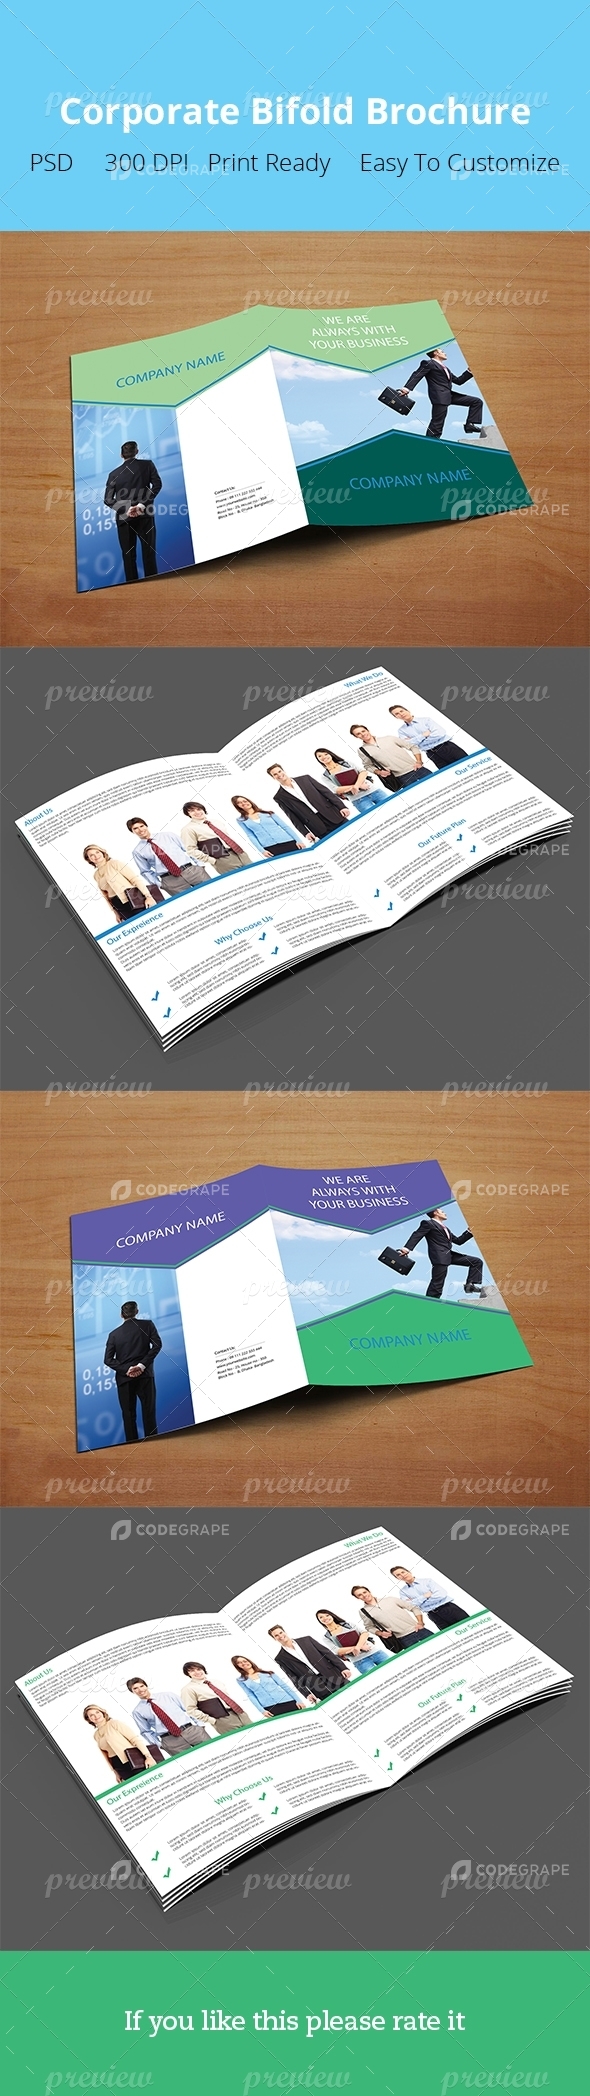 Corporate Bifold Brochure Template